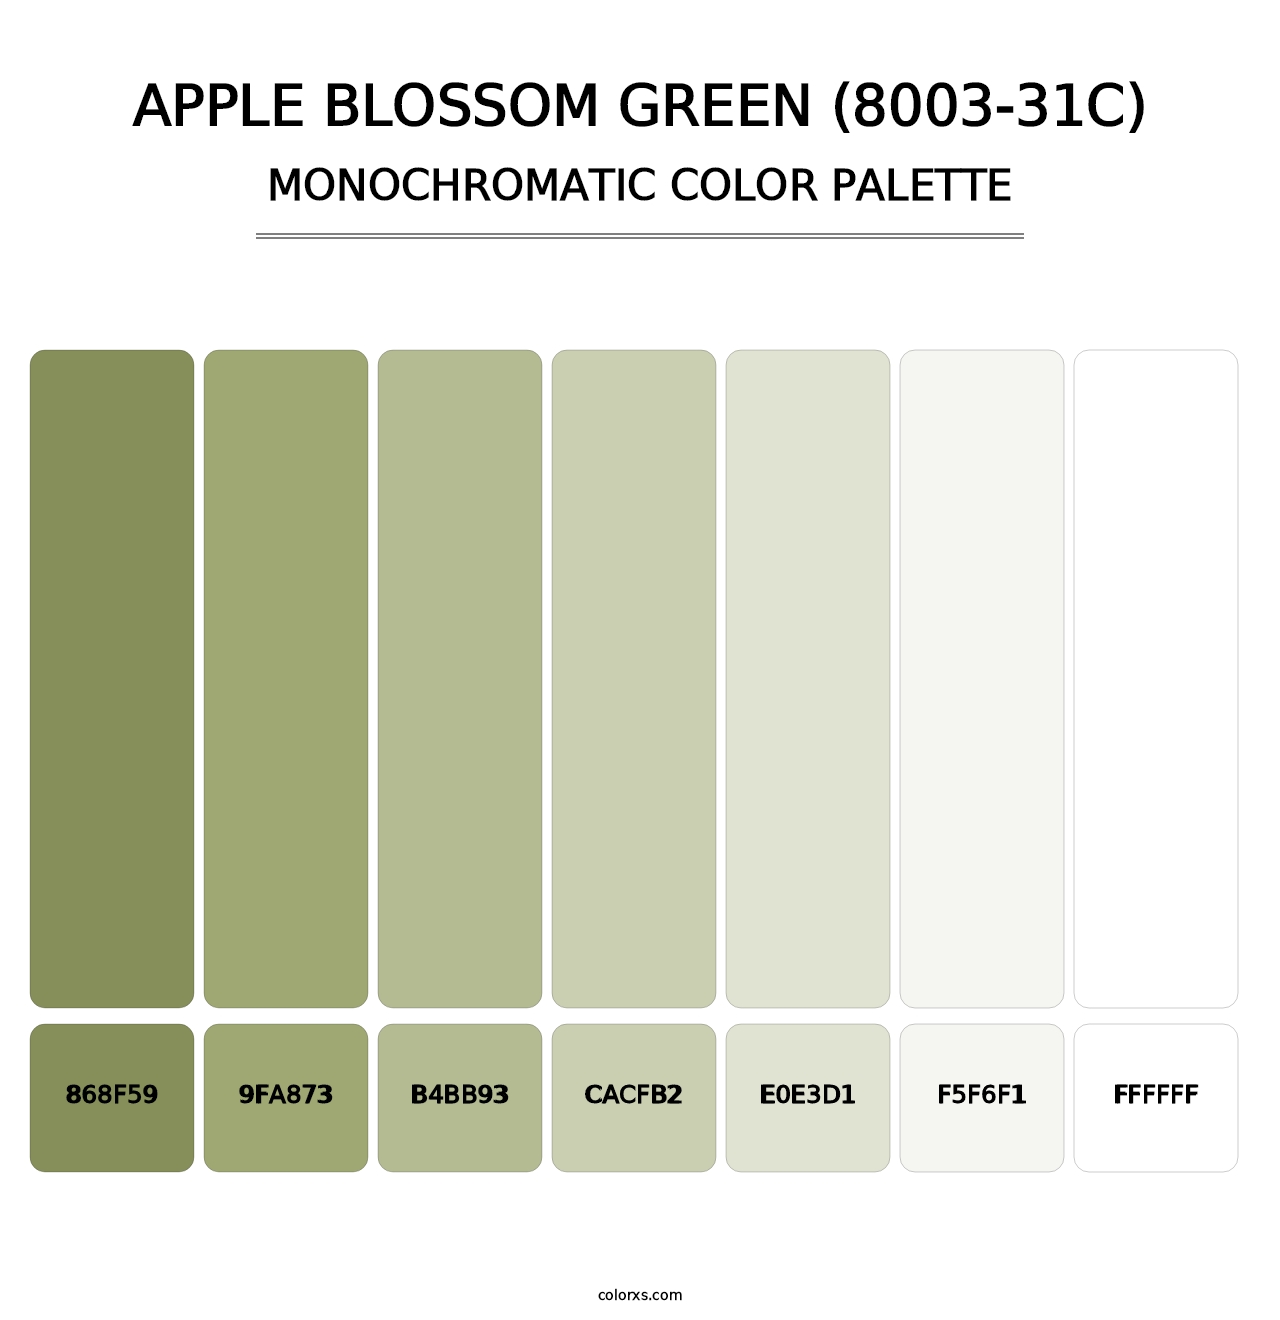 Apple Blossom Green (8003-31C) - Monochromatic Color Palette